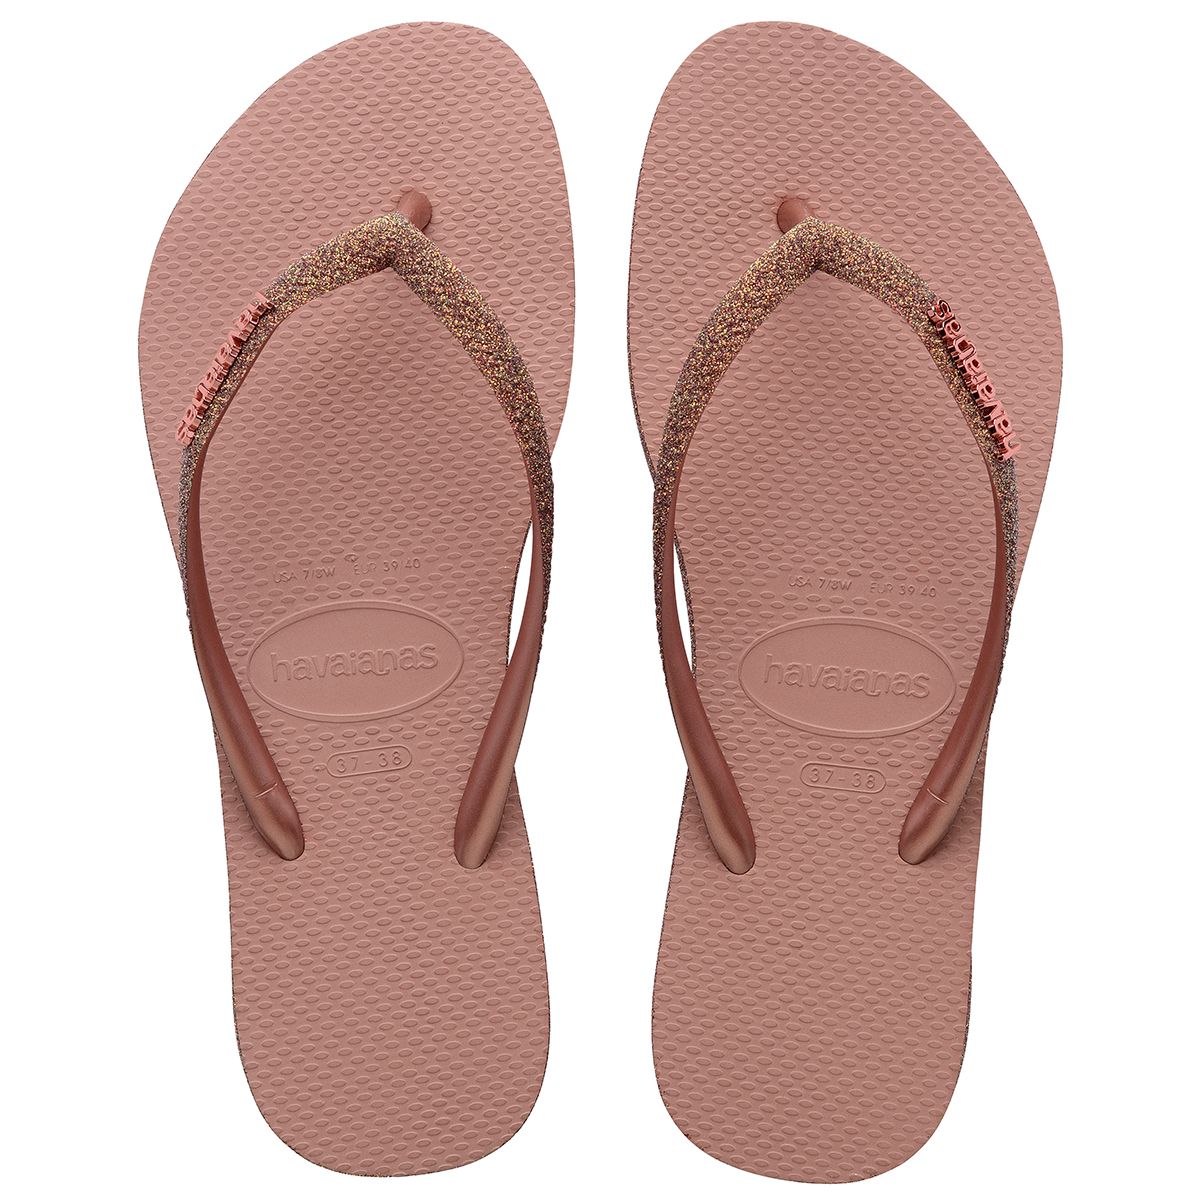 Havaianas Slim Sparkle 2 Womens Sandal 3544-Crocus Rose 9